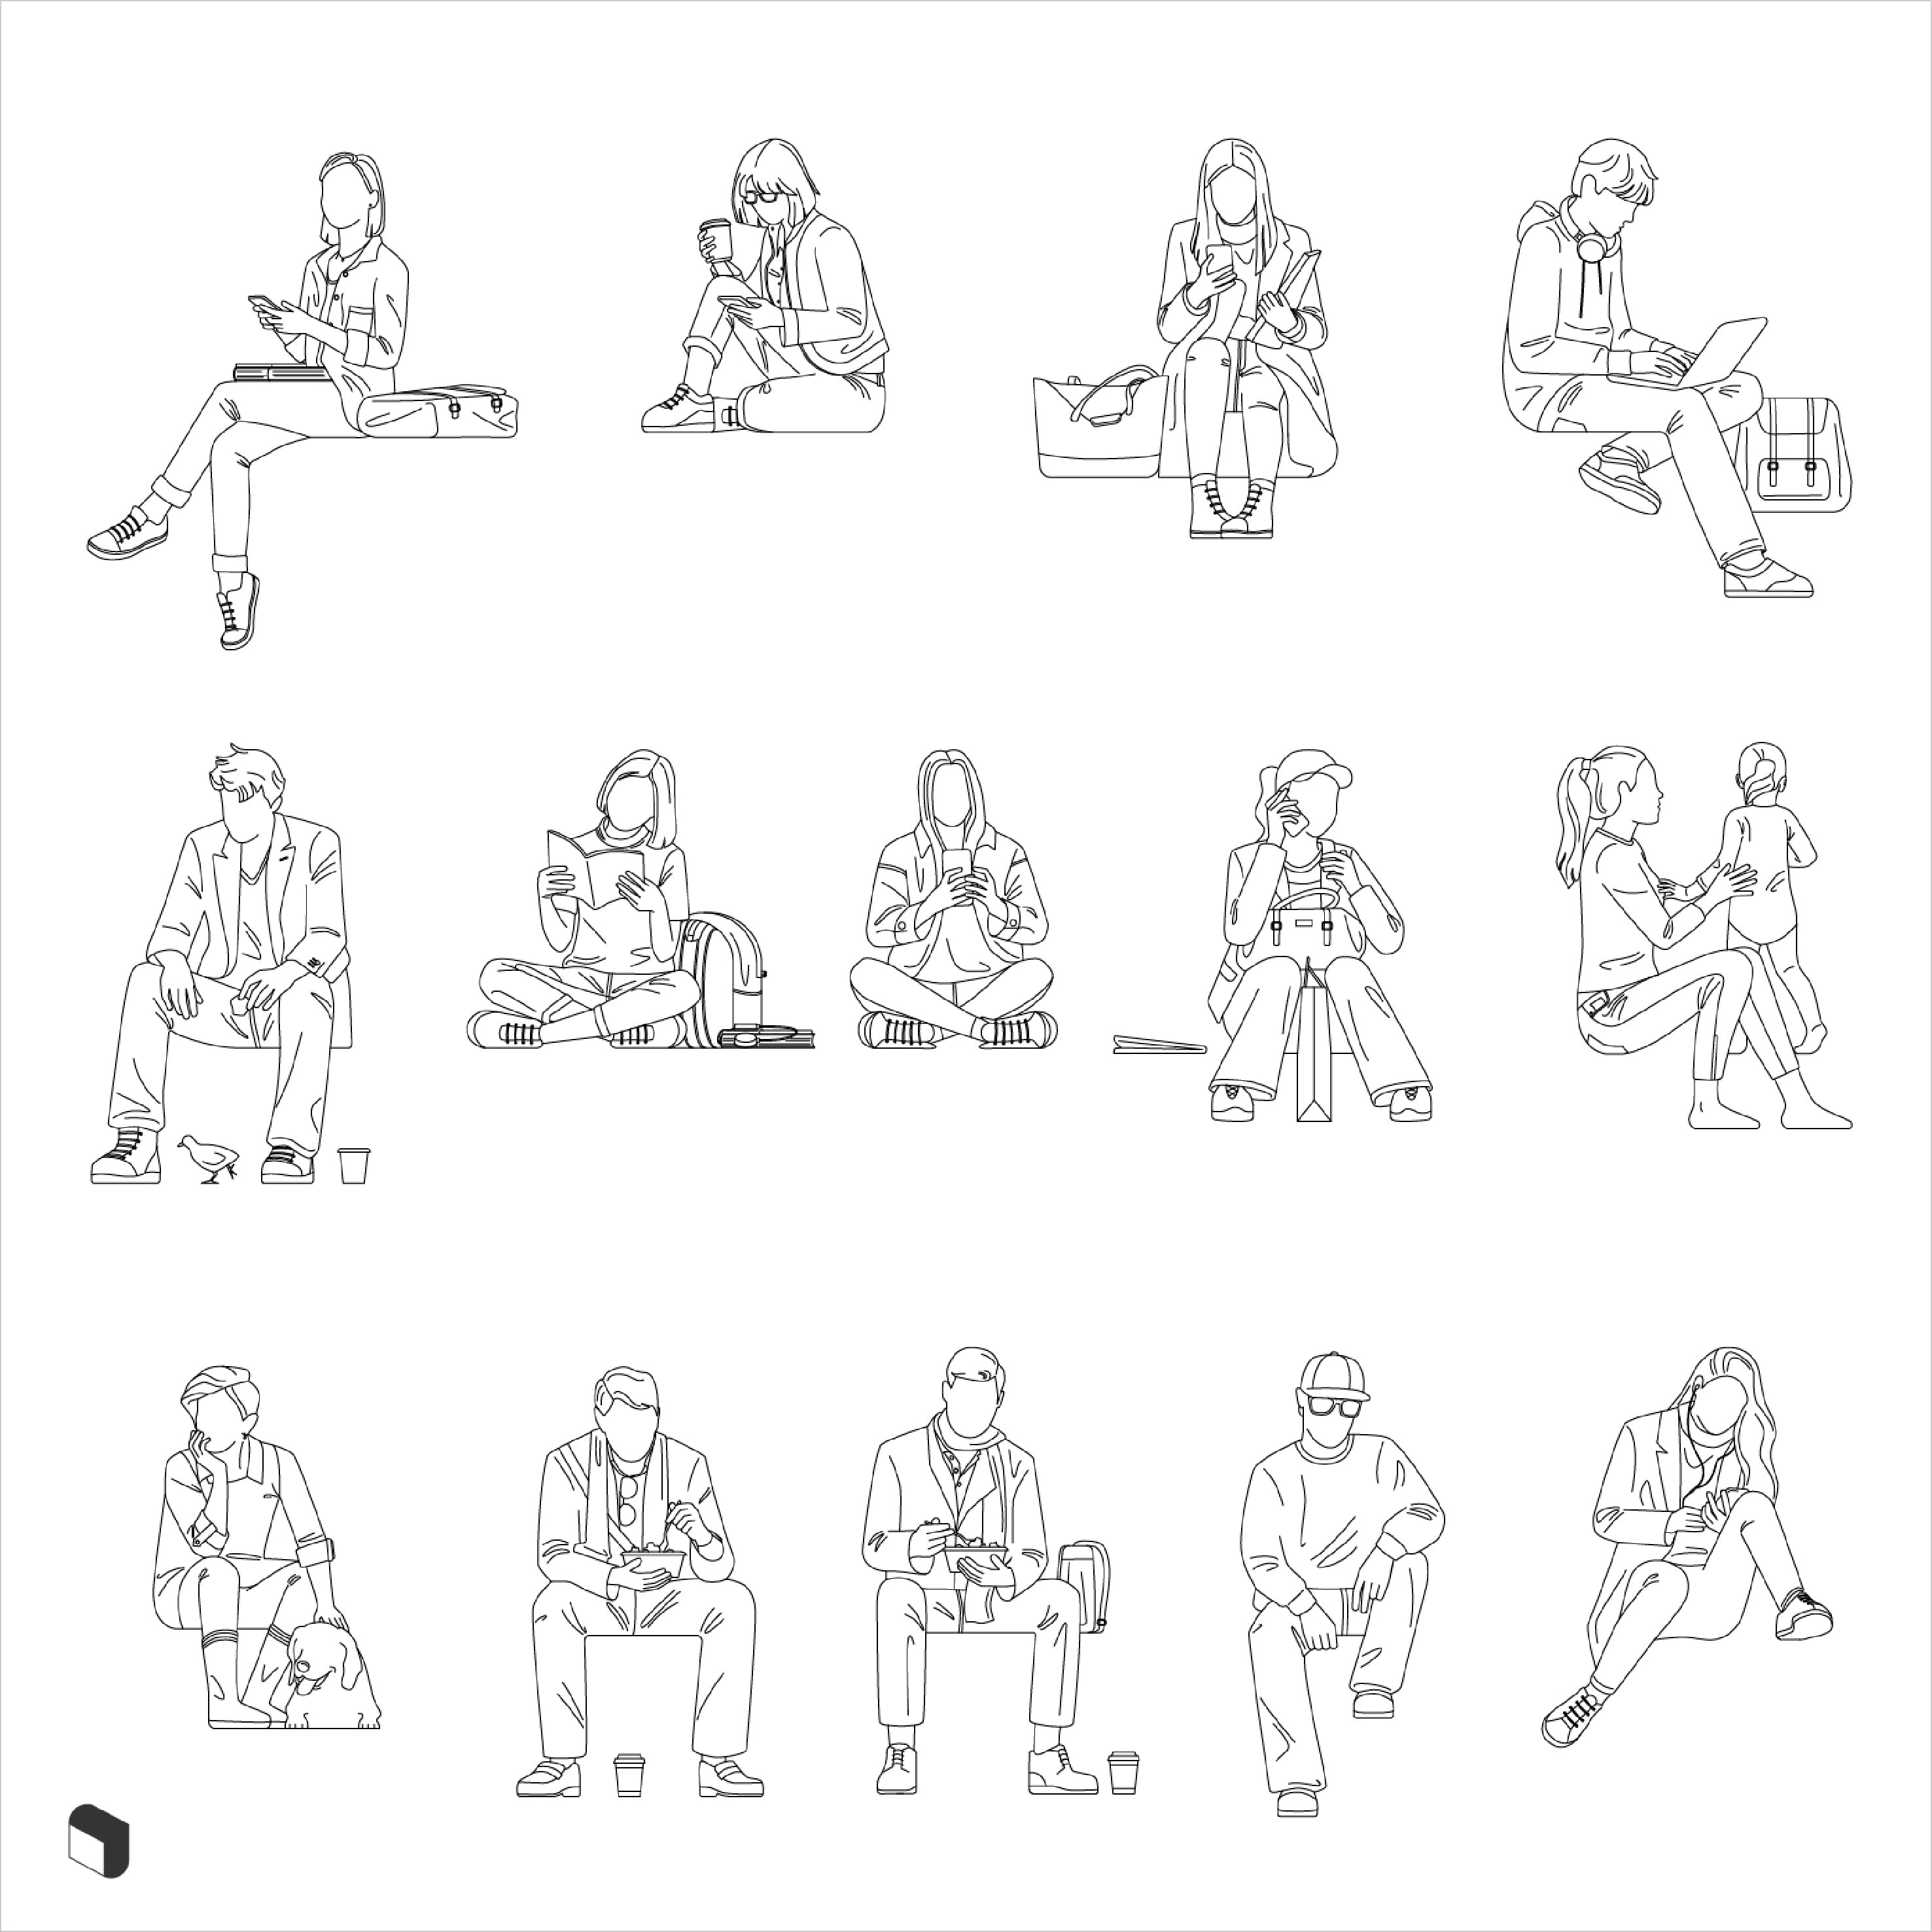 Cad Sitting People 2 DWG | Toffu Co